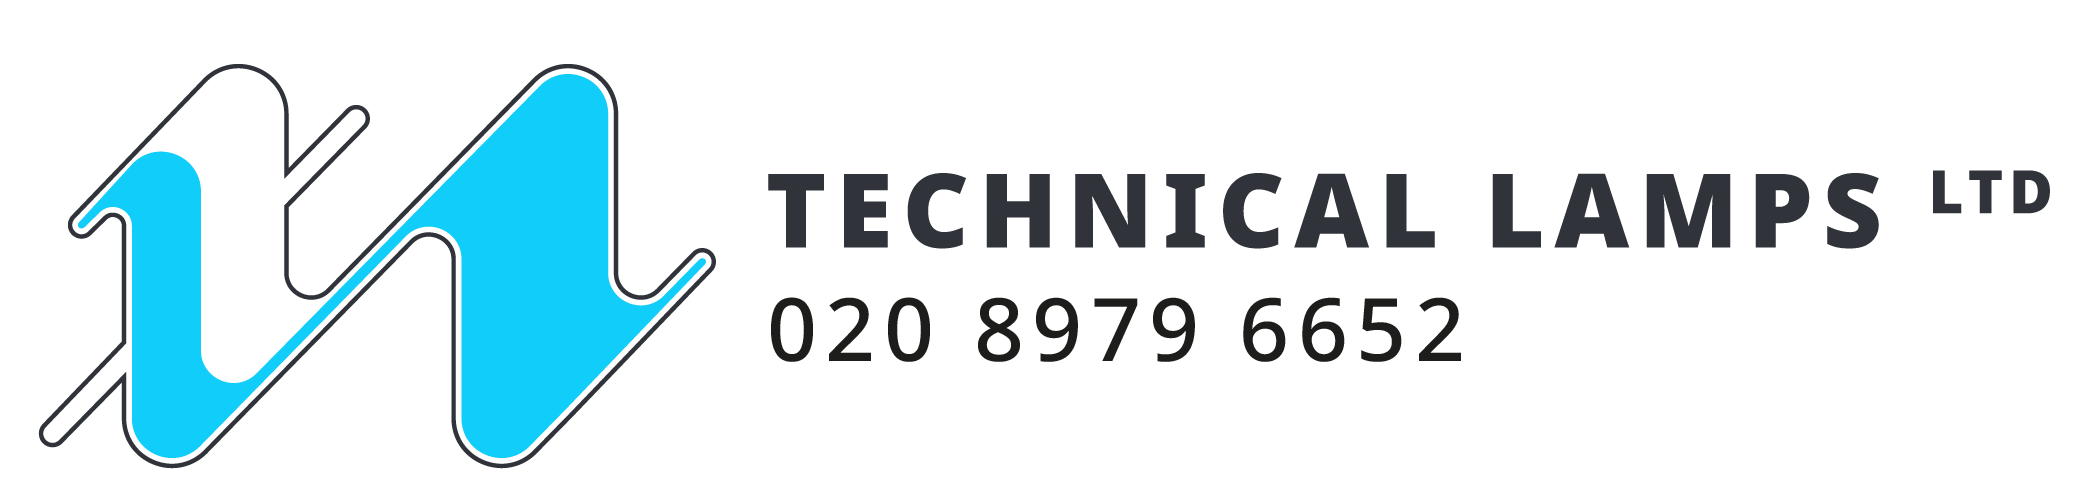 Technical Lamps Ltd - 020 8979 6652